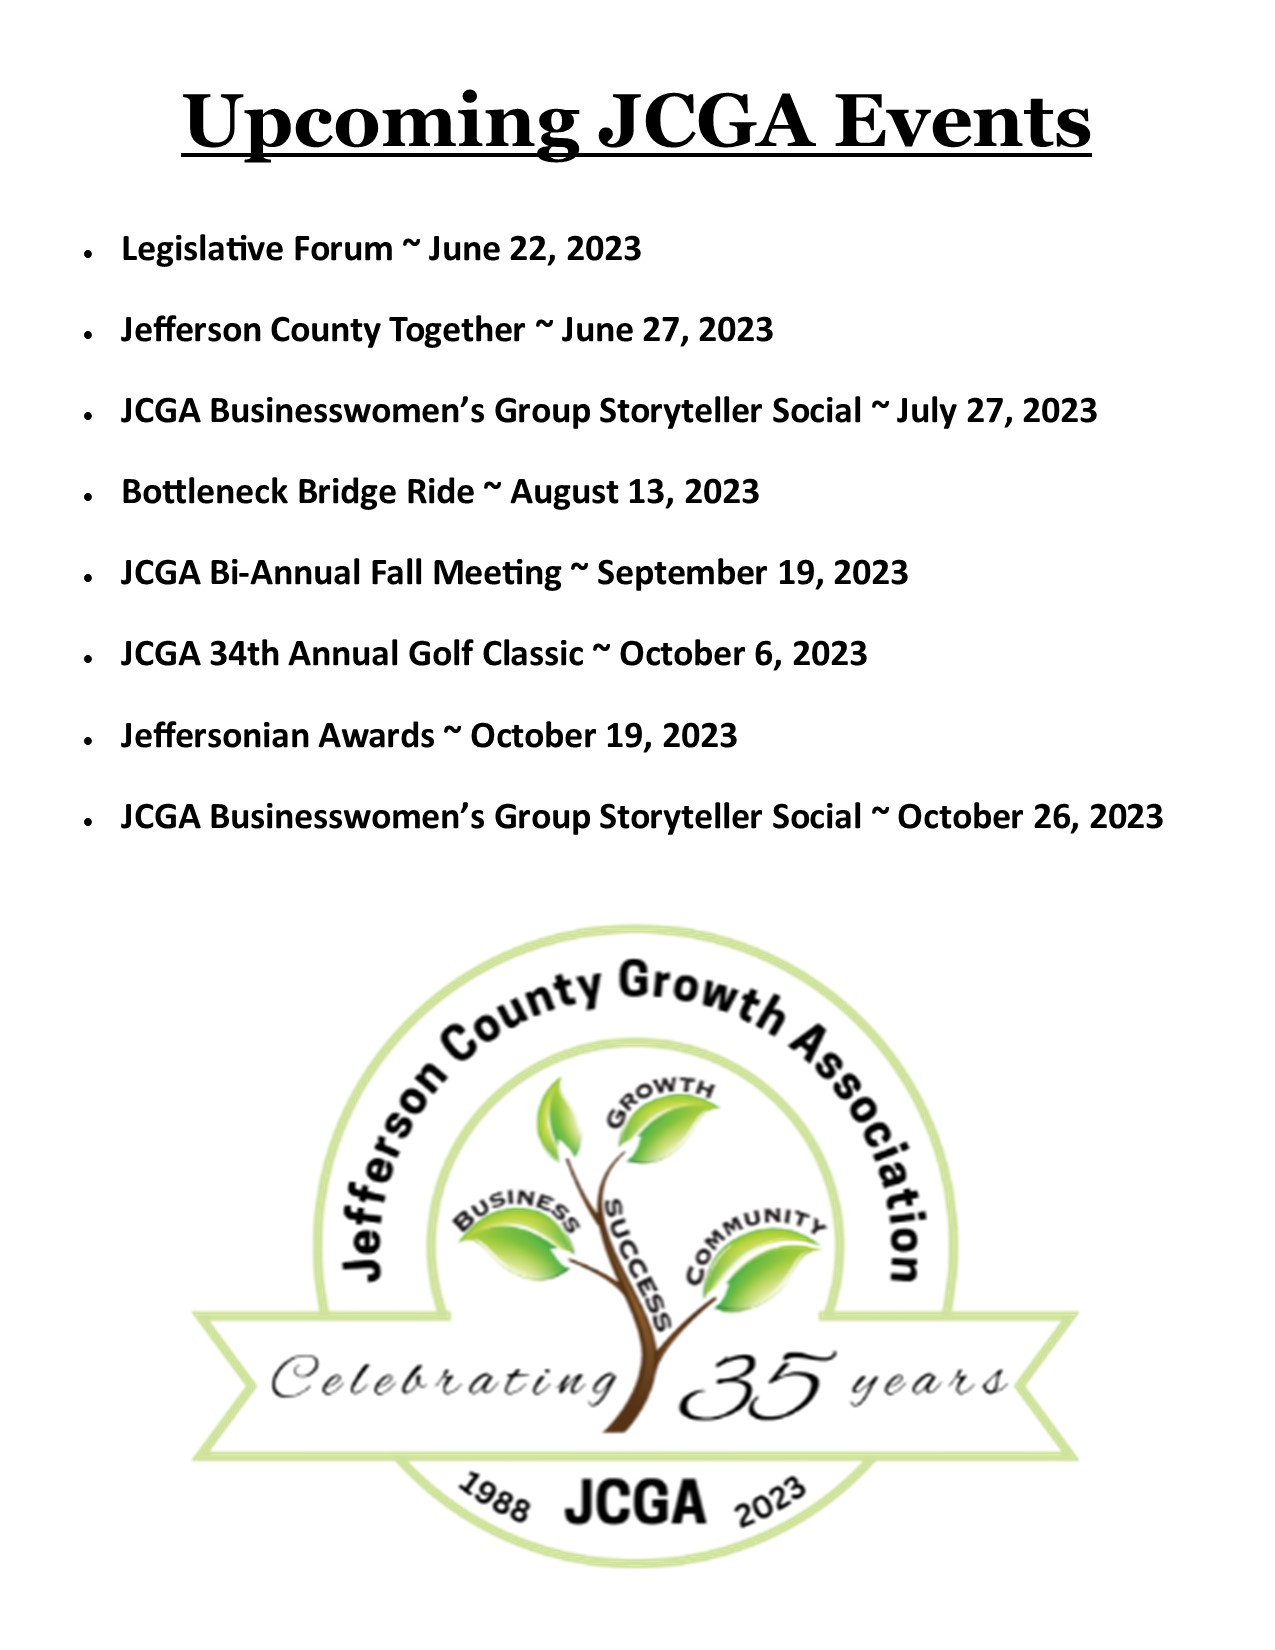 2023 JCGA Event Calendar